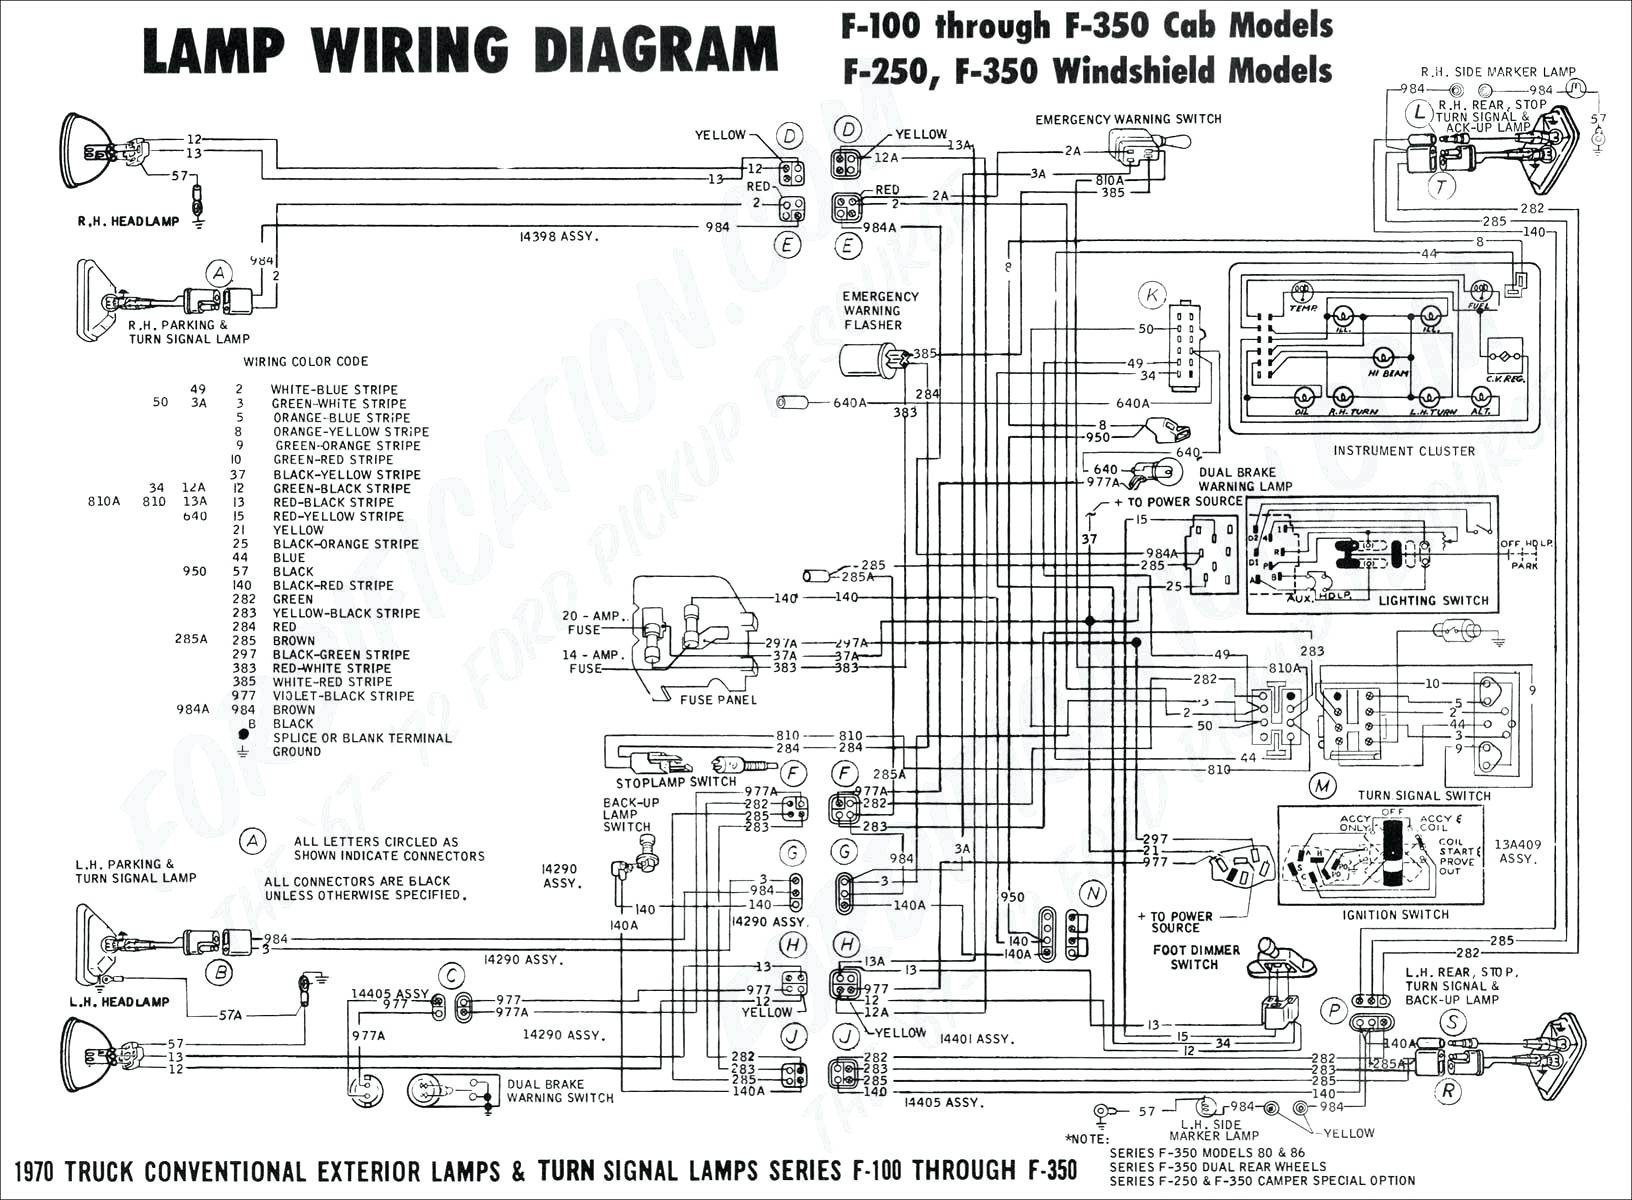 700R4 Torque Converter Lockup Wiring Diagram | Best Wiring Library - 700R4 Torque Converter Lockup Wiring Diagram